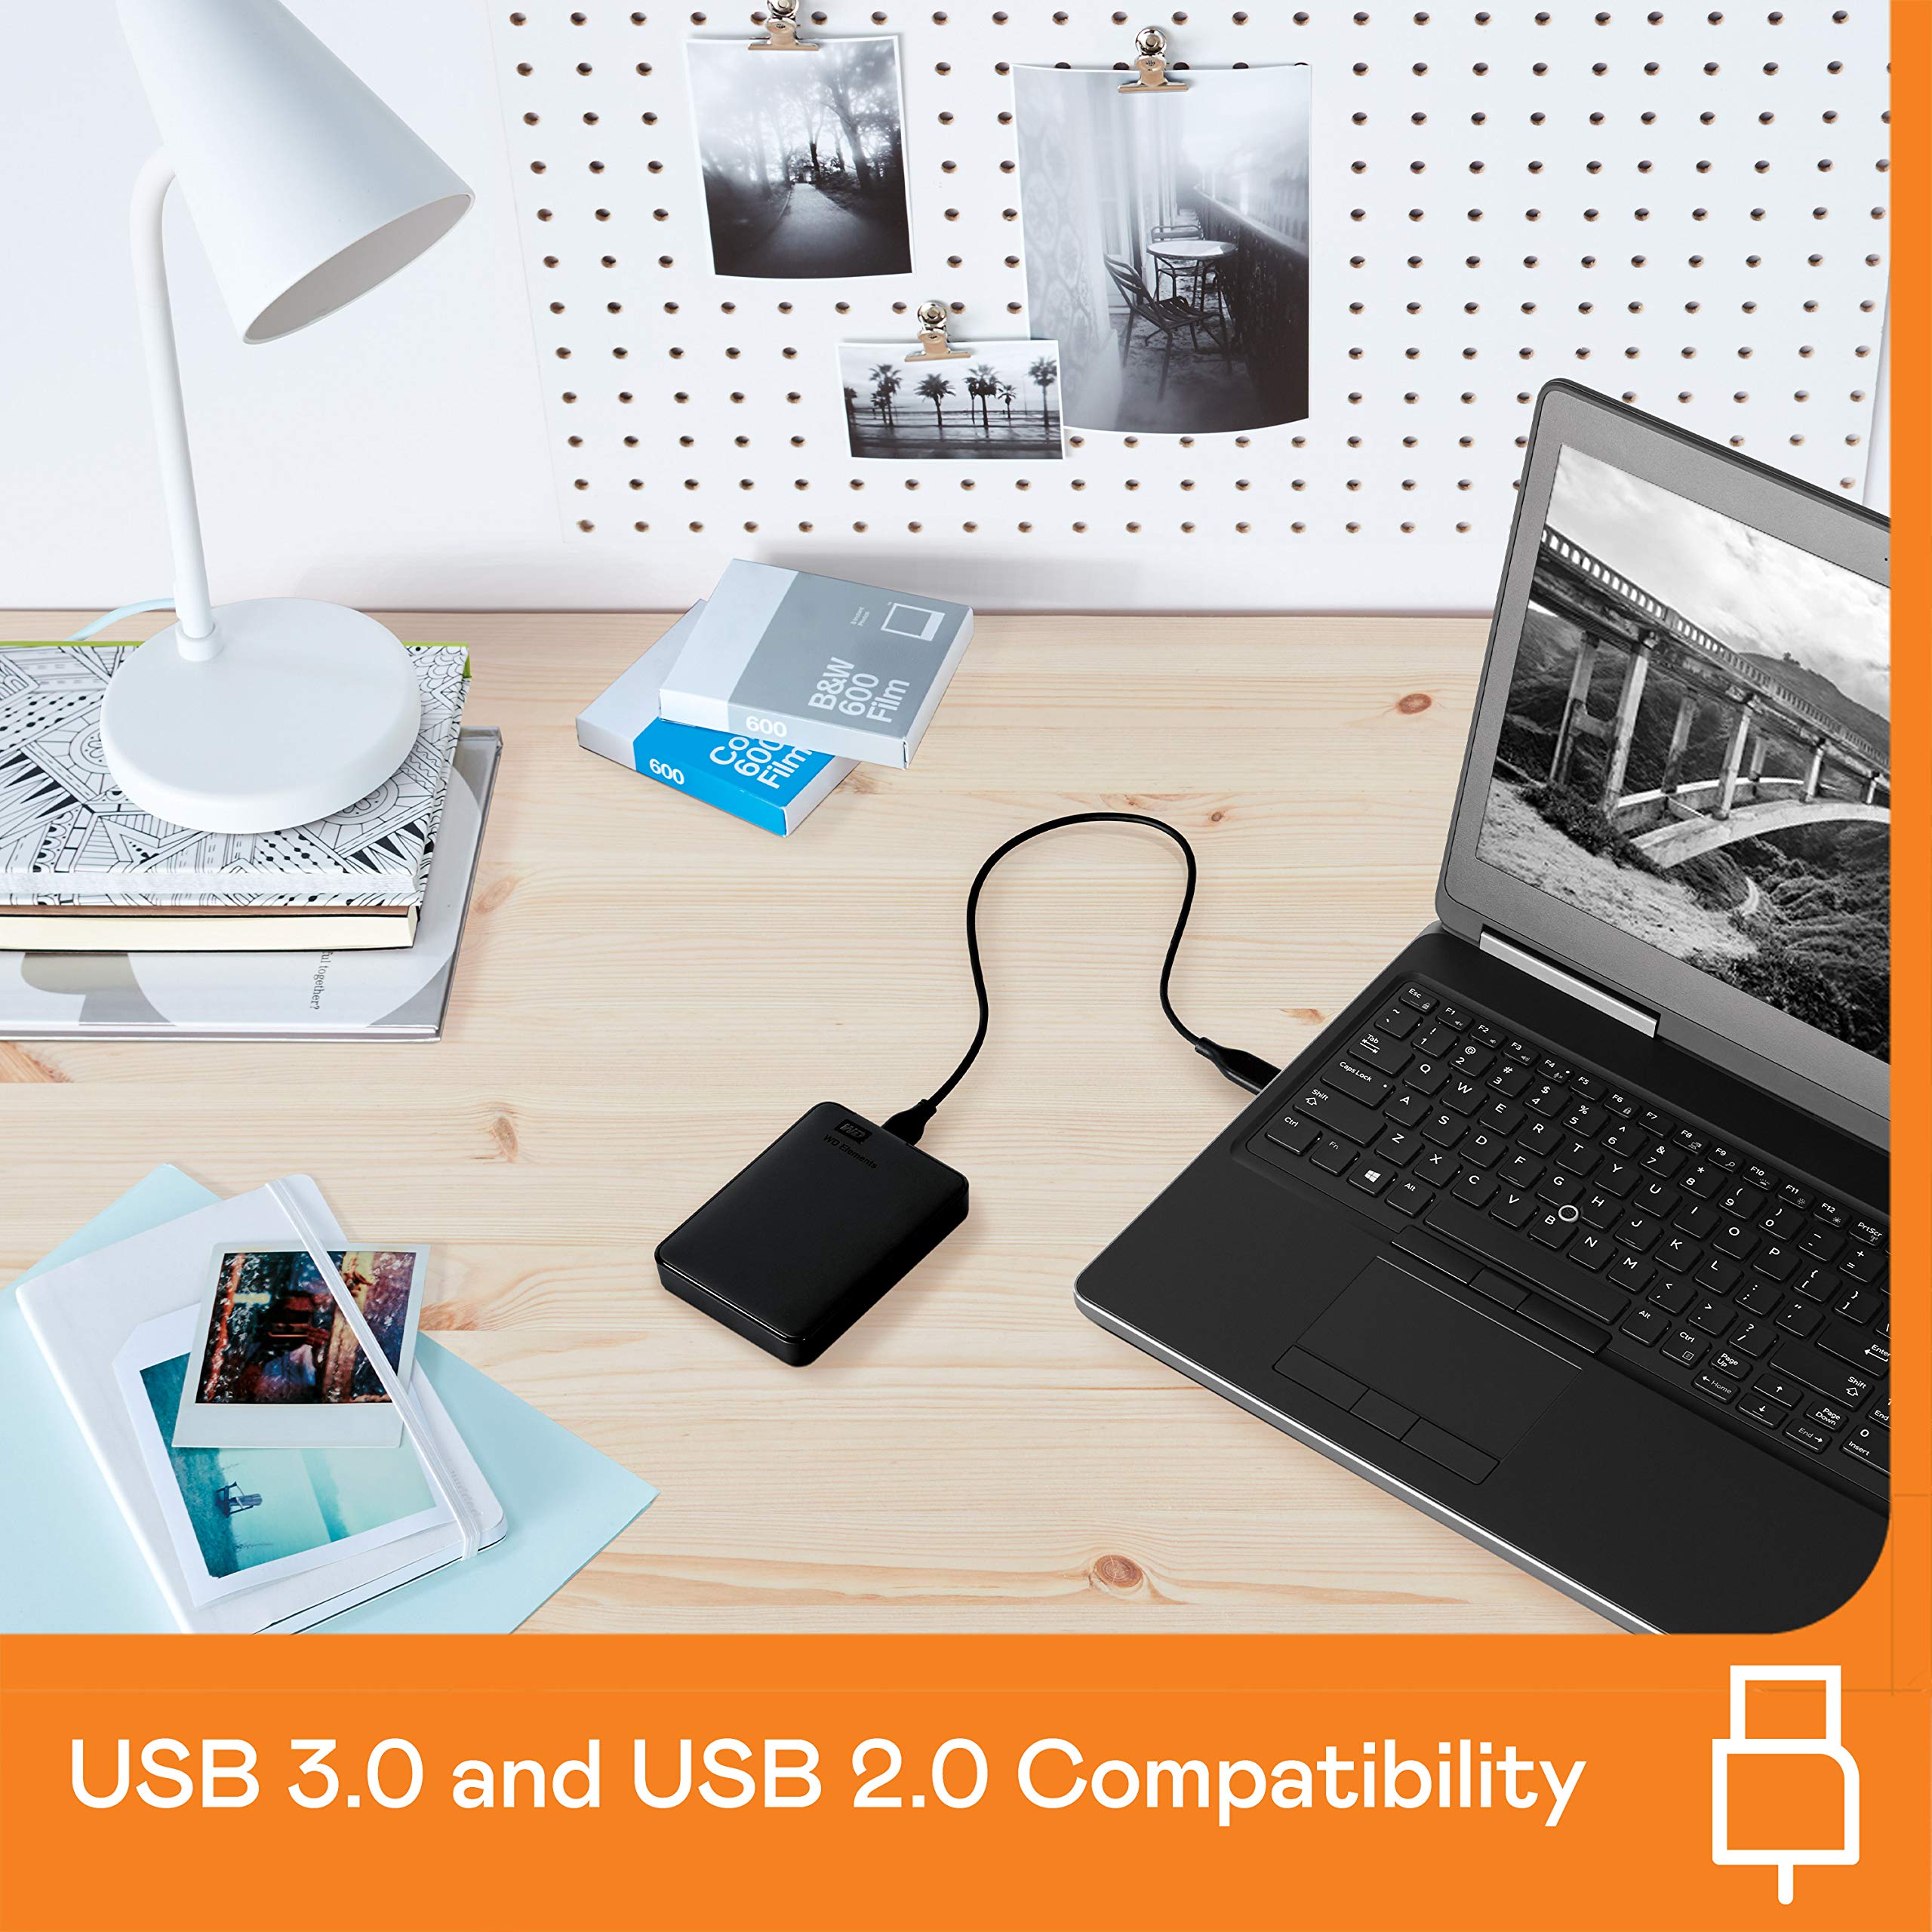 WD 5TB Elements Portable HDD, External Hard Drive, USB 3.0 for PC & Mac, Plug and Play Ready - WDBU6Y0050BBK-WESN